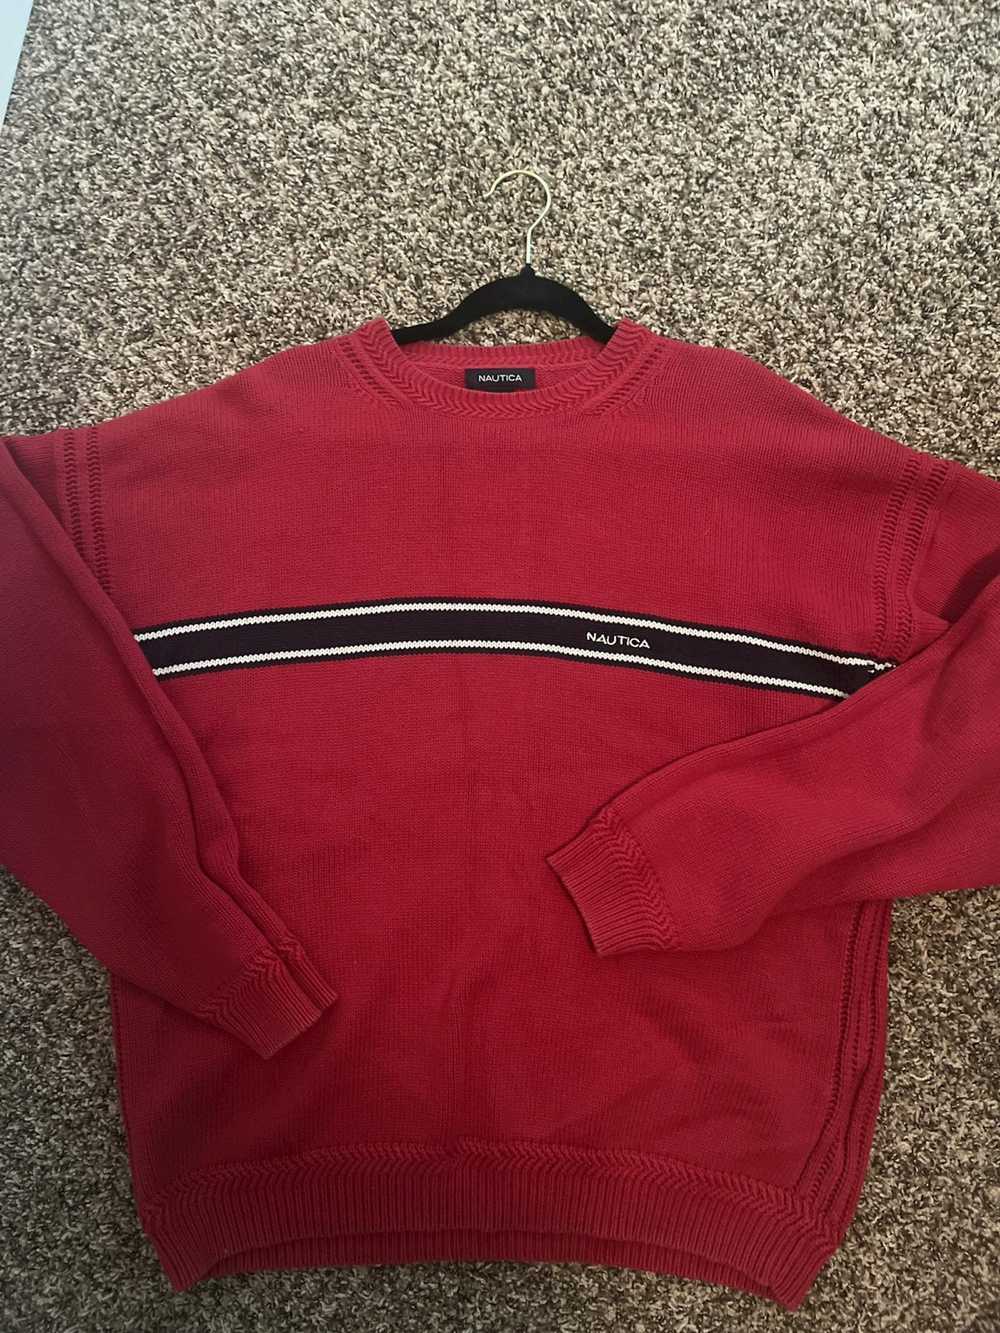 Nautica Red stripped nautica sweater - image 4